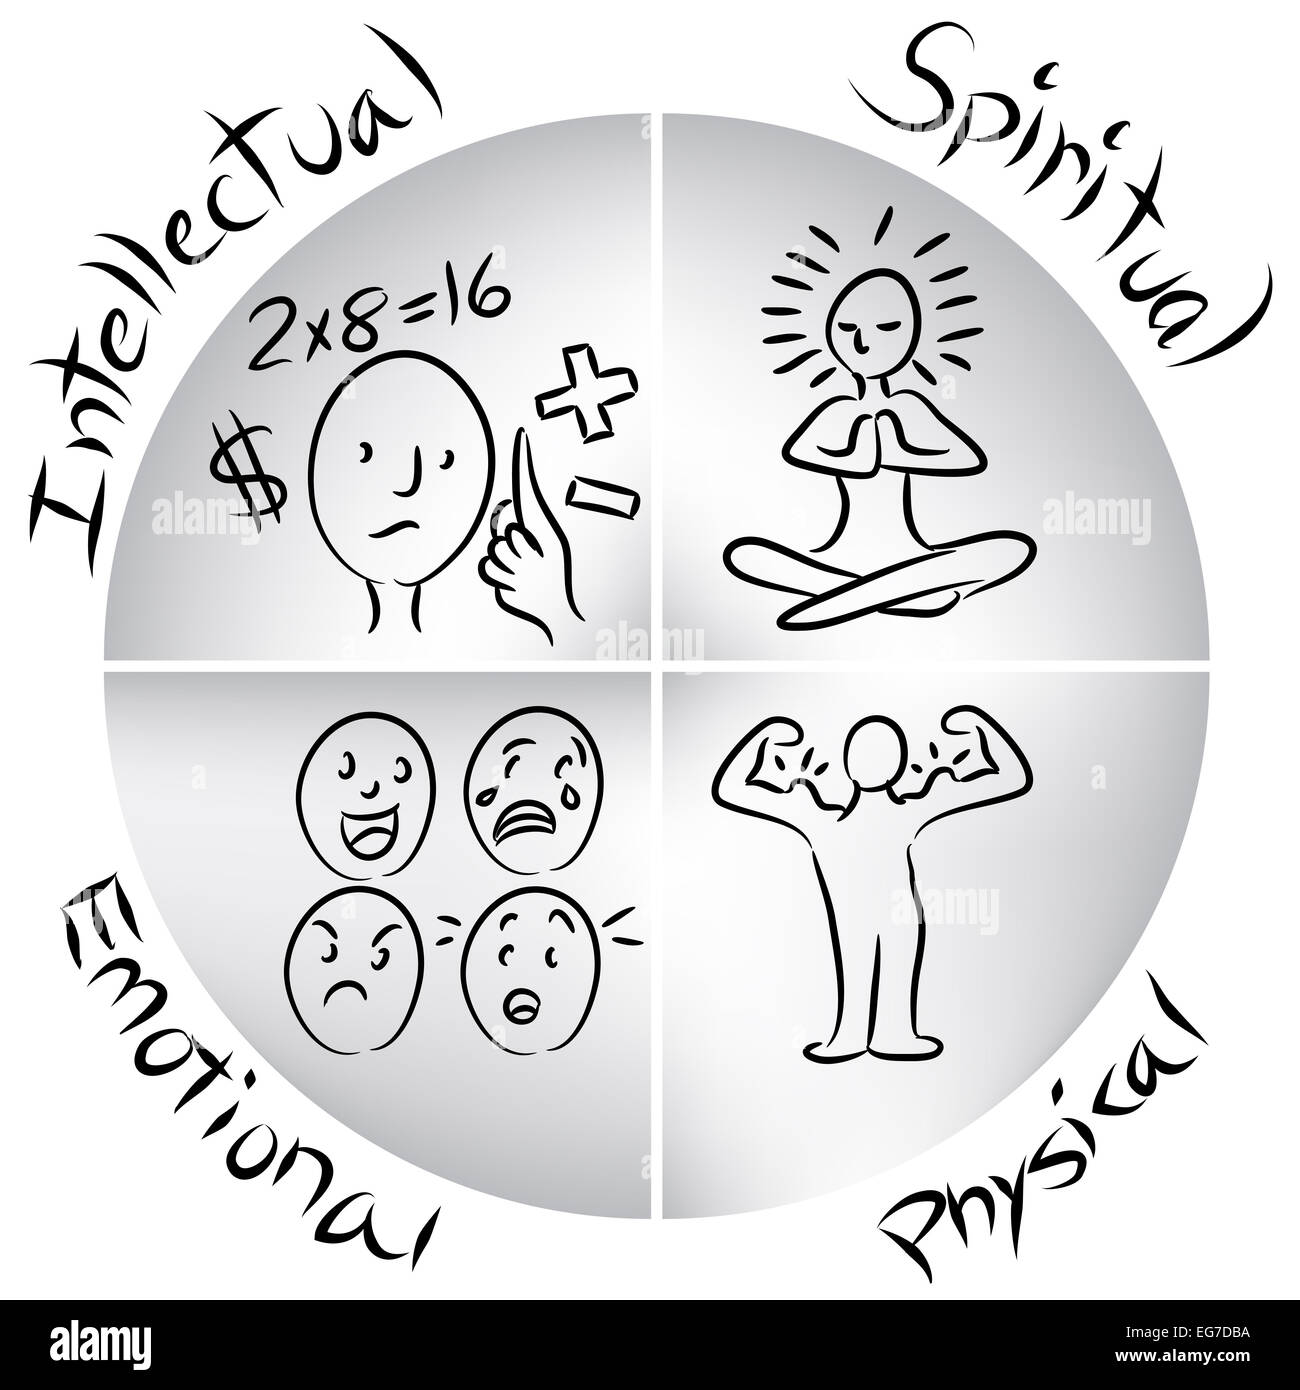 An image of a intellectual, emotional, physical and spiritual balanced human chart. Stock Photo